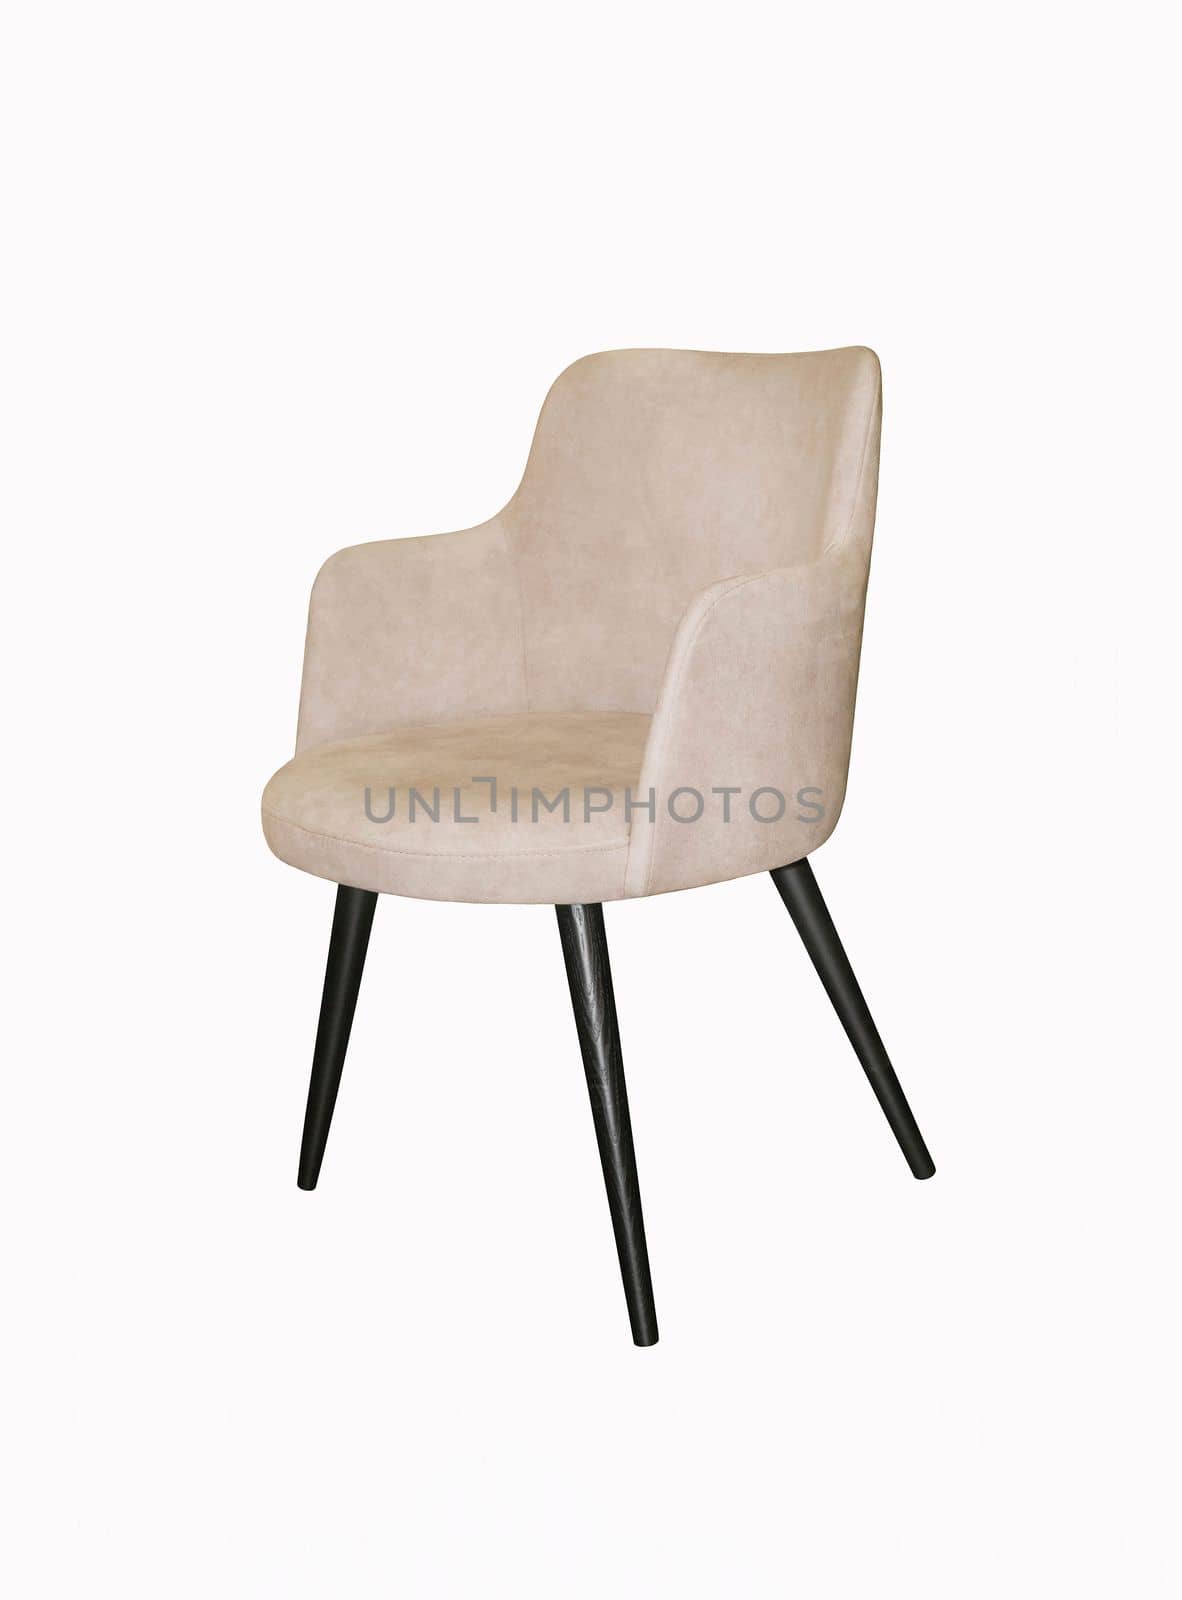 Cream armchair with black legs on white background. Interior element.